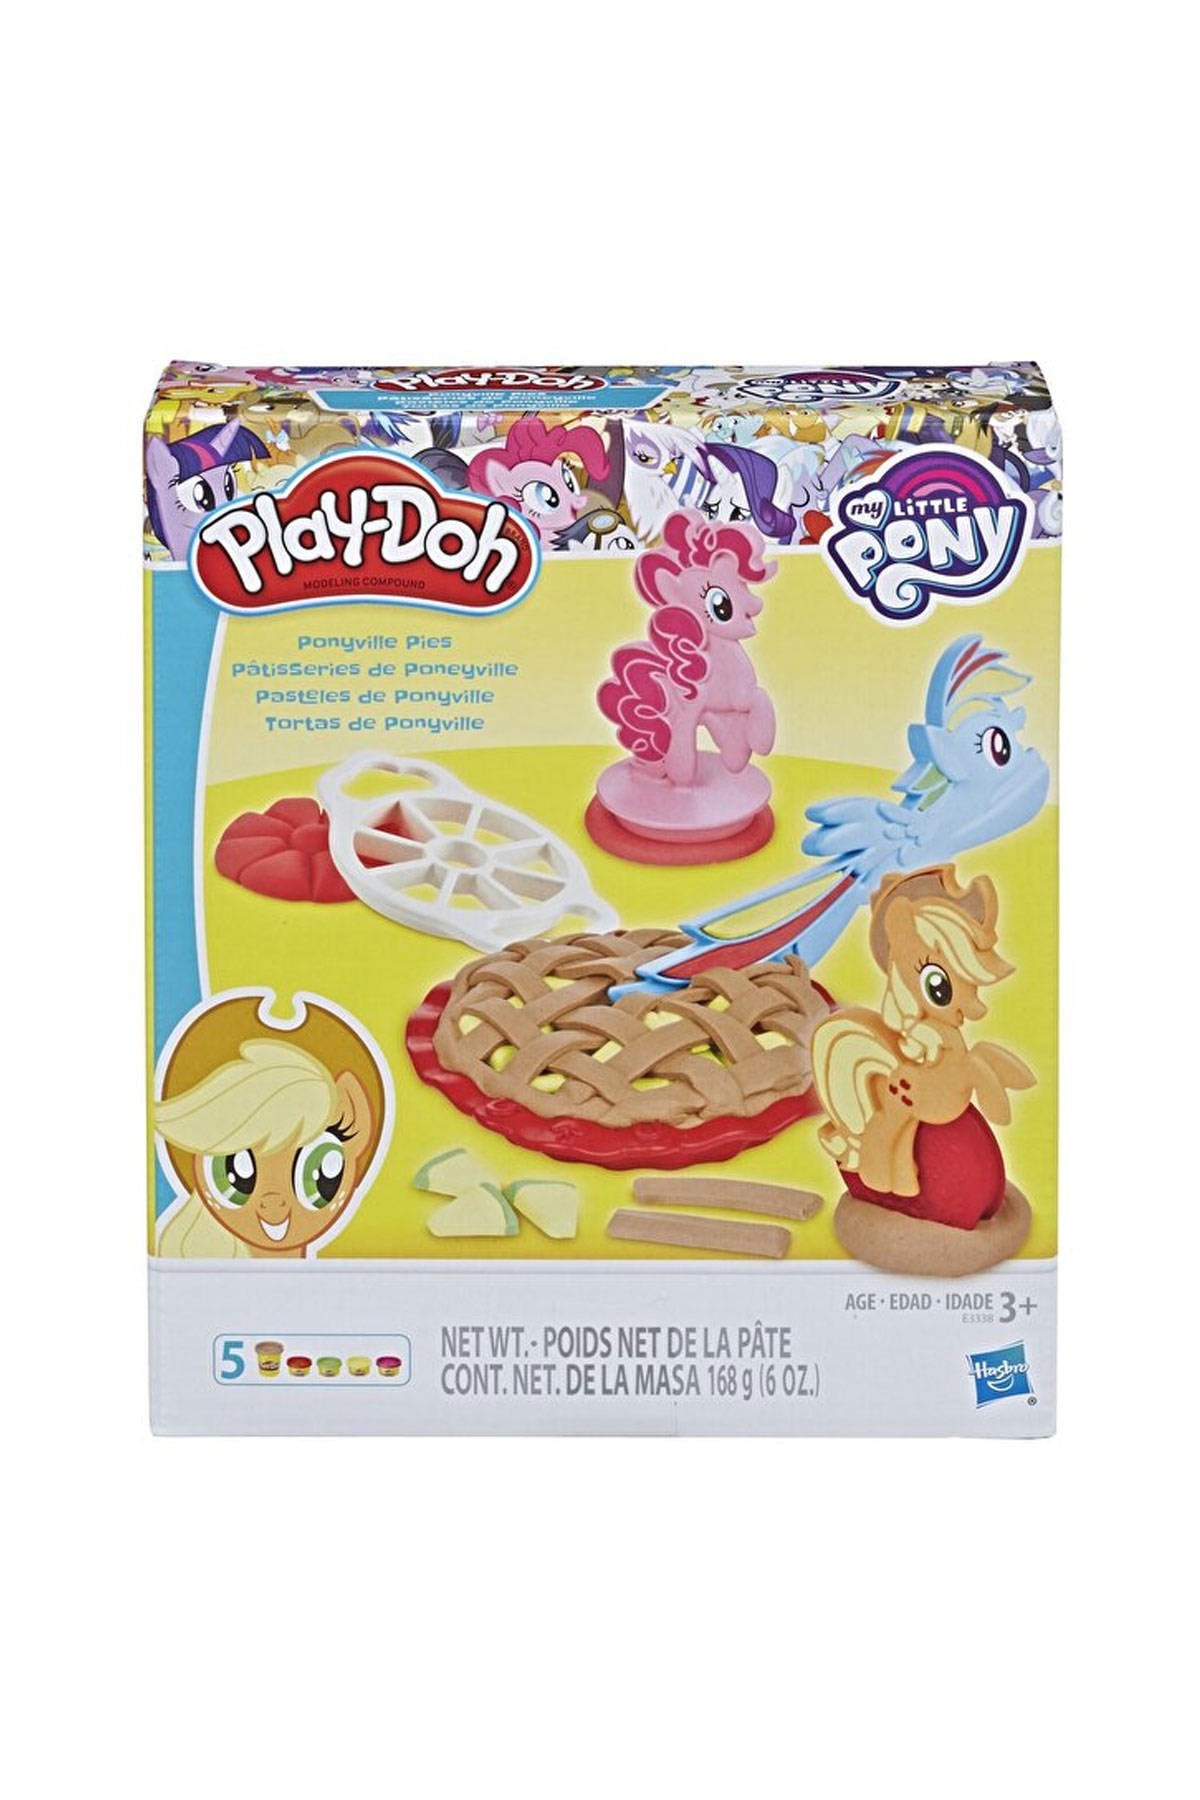 Play-Doh Ponyville Turta Partisi